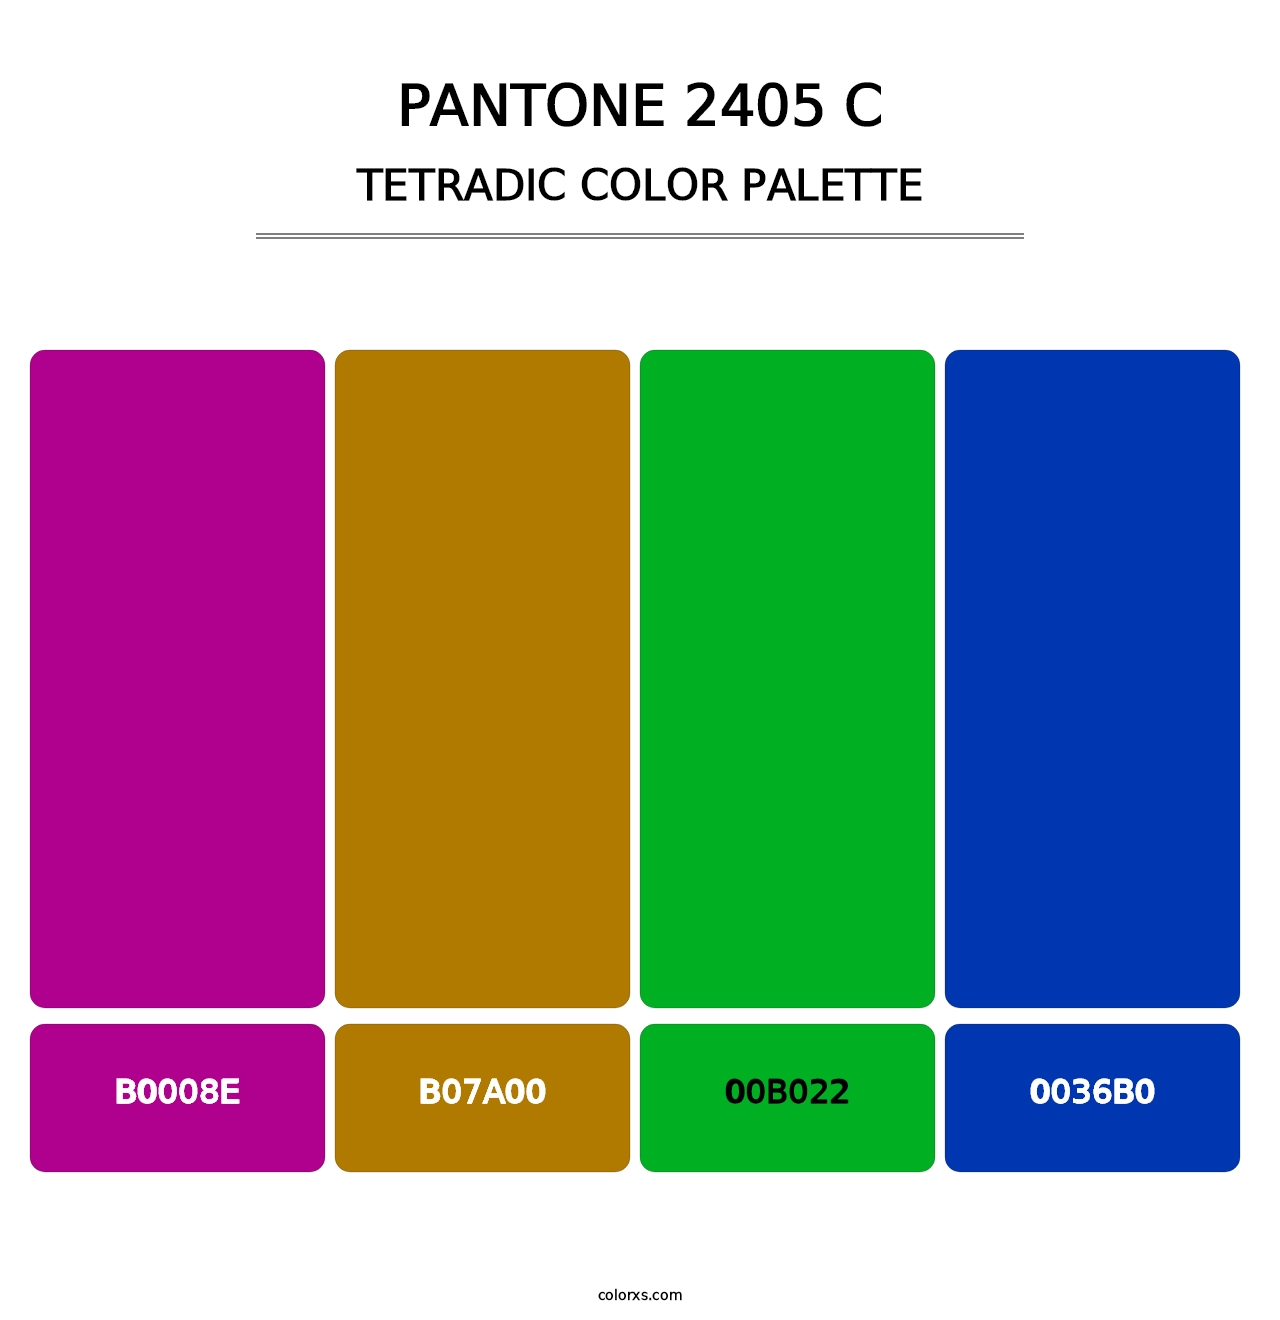 PANTONE 2405 C - Tetradic Color Palette